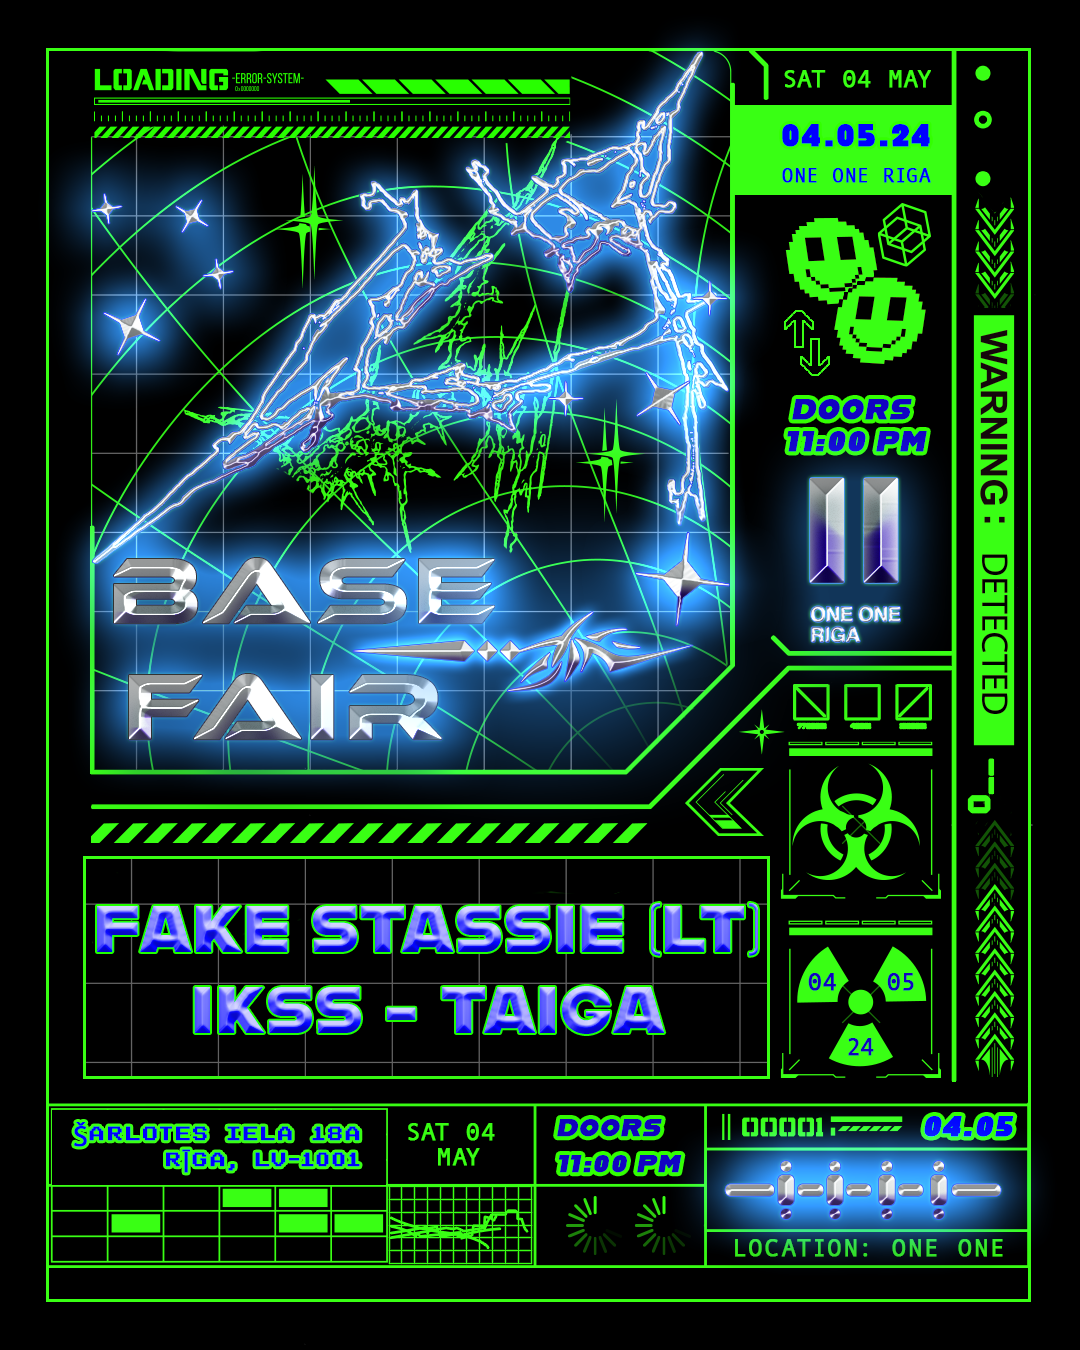 BASE FAIR with FAKE STASSIE, Ikss, Taiga - フライヤー表